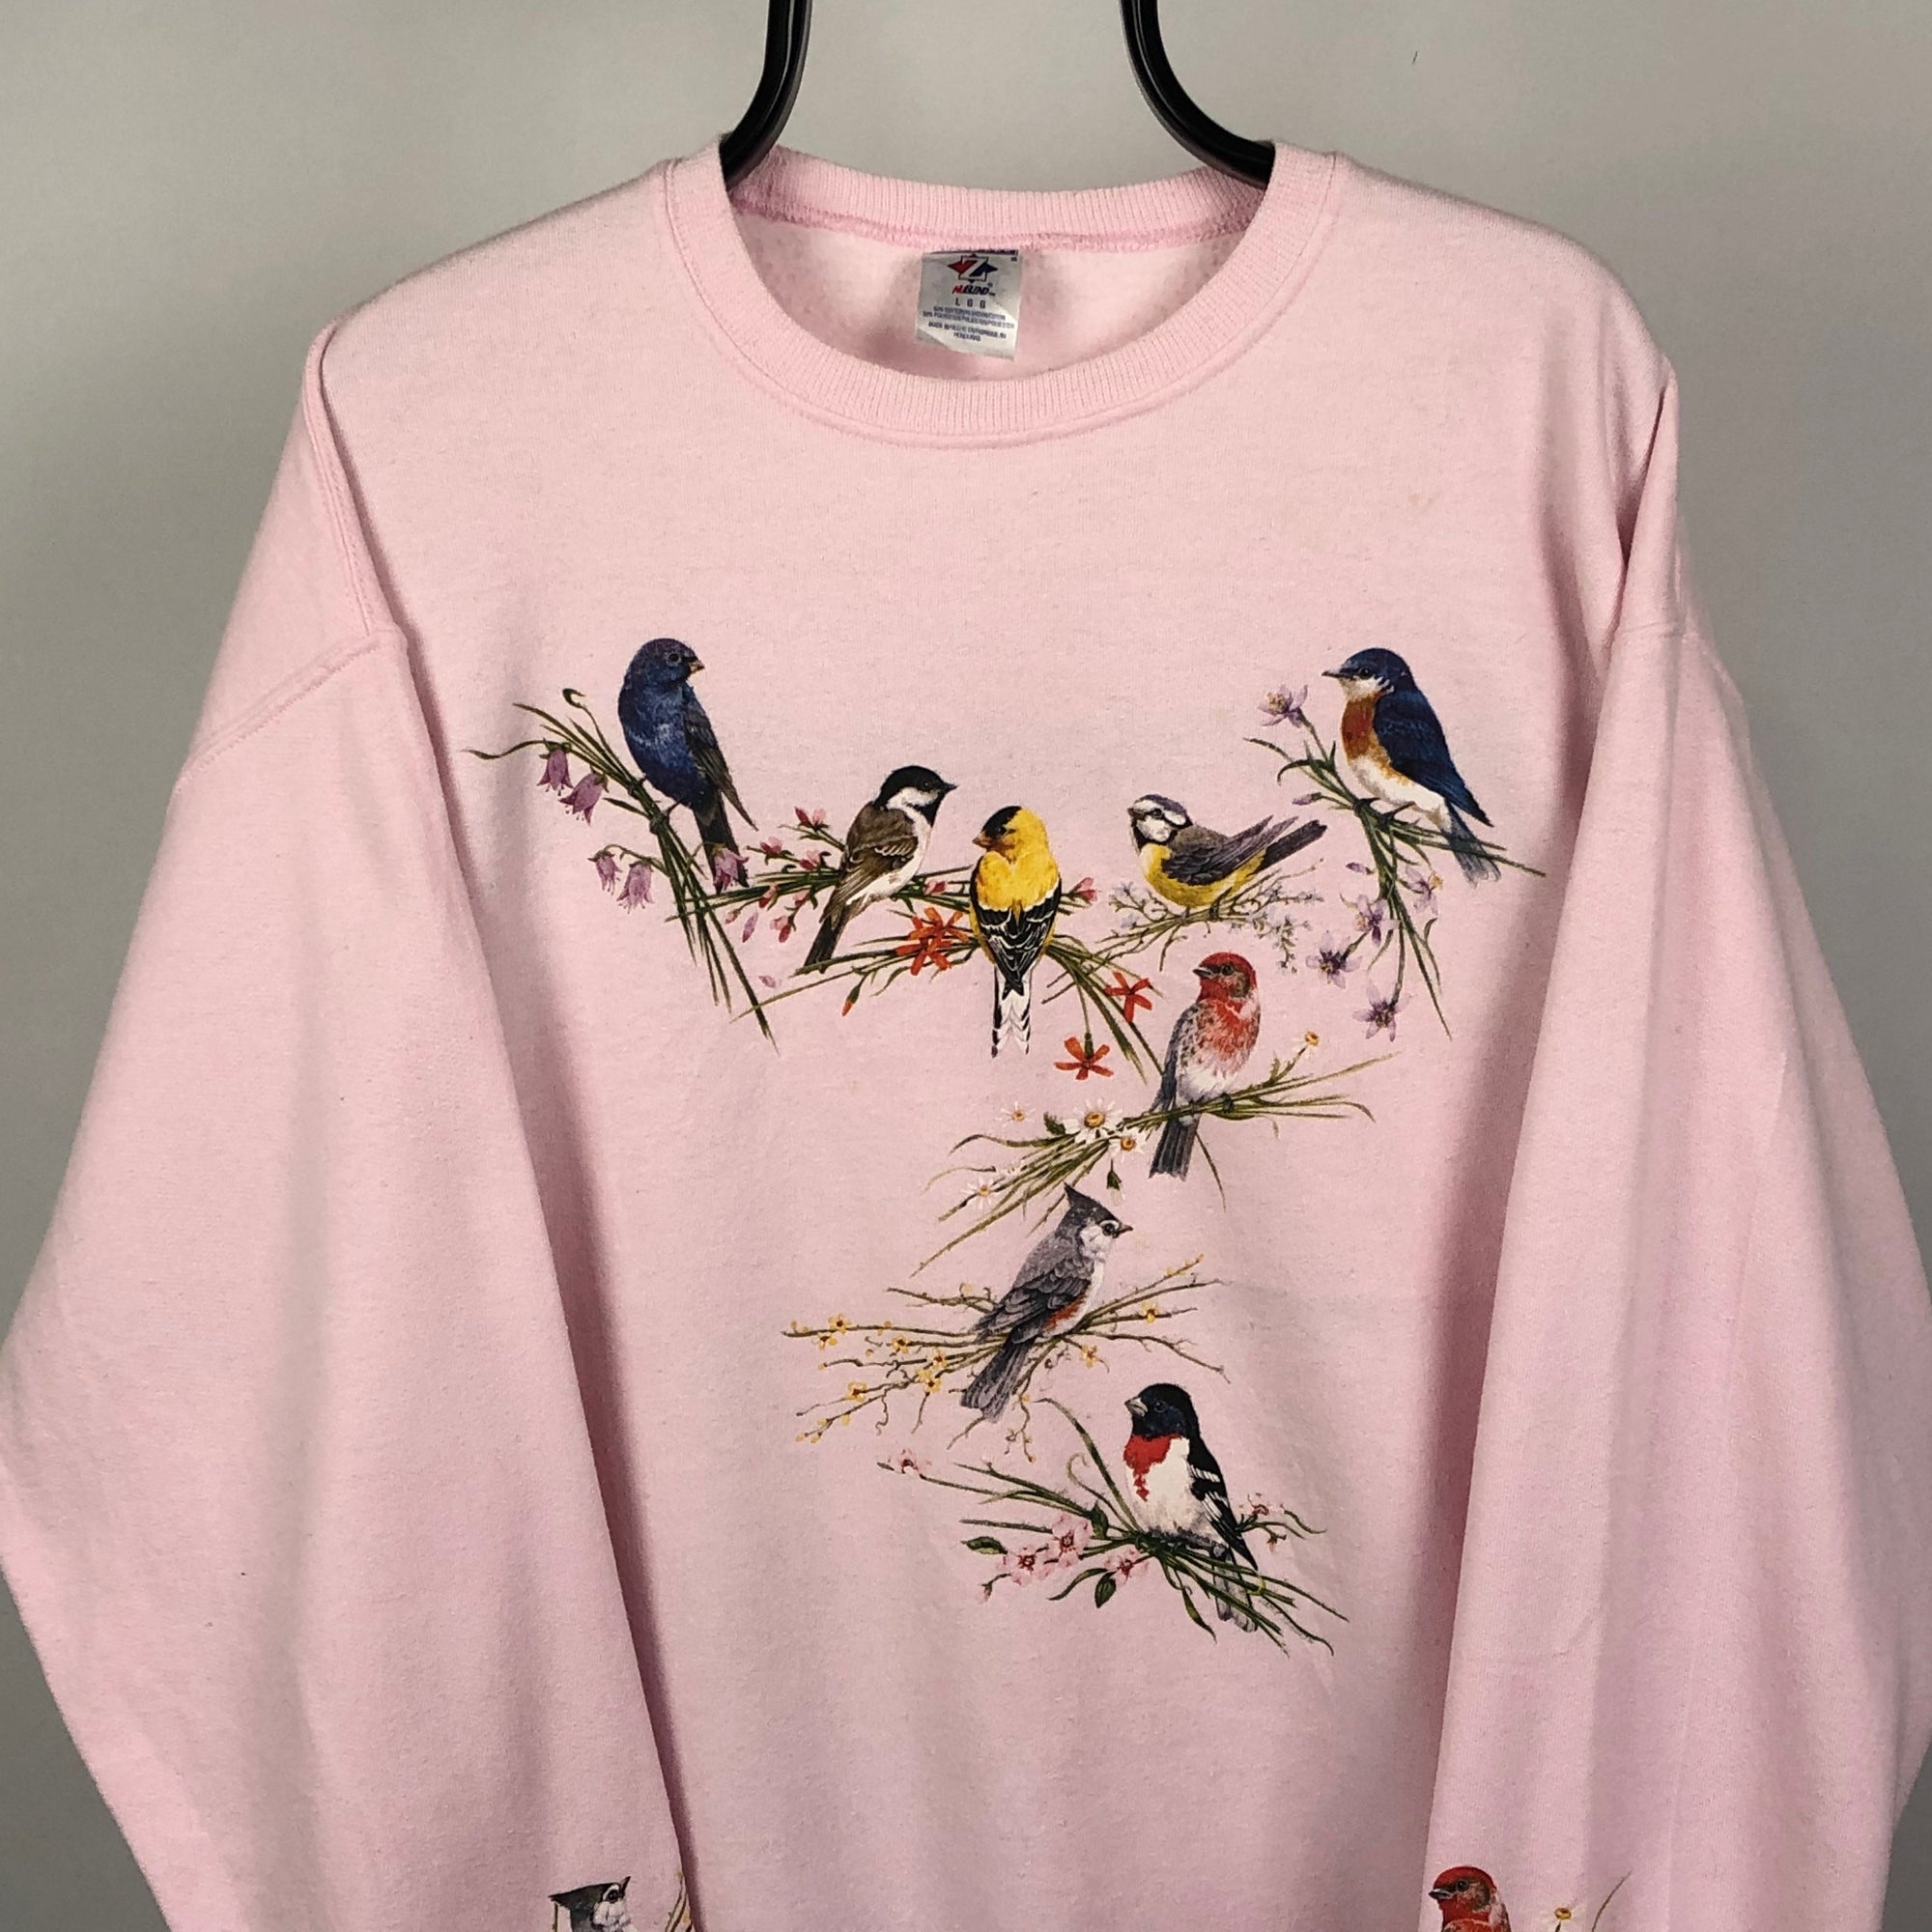 Vintage Wild Bird Print Sweatshirt in Pink - Men's Large/Women's XL